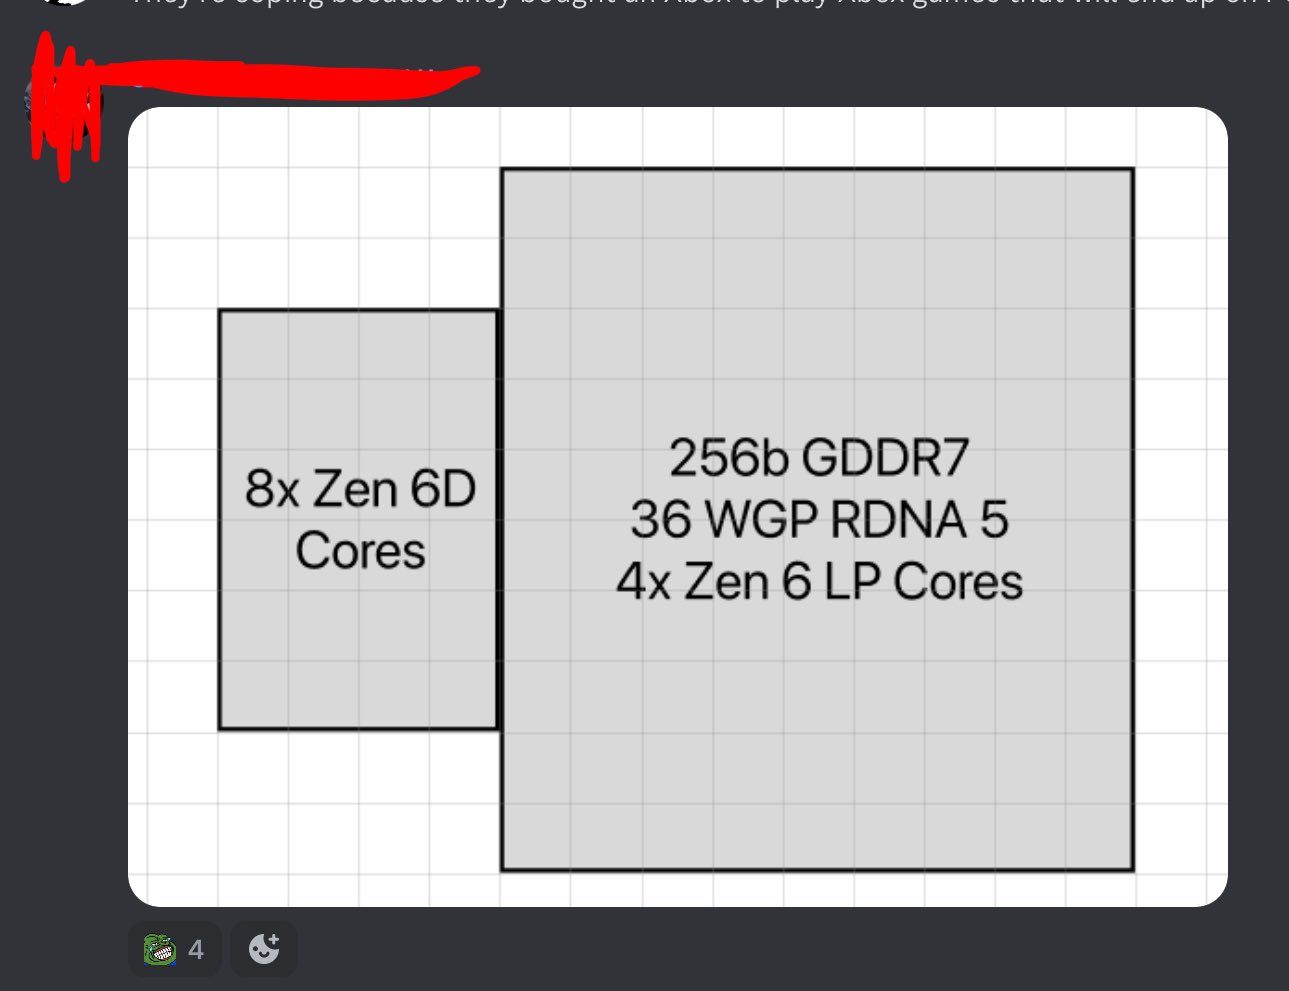 gfu i4xxiaa ccl  ลือ!! ซีพียู AMD ZEN6 ในรหัส “Medusa” จะมีกราฟิก RDNA5 ในตัว